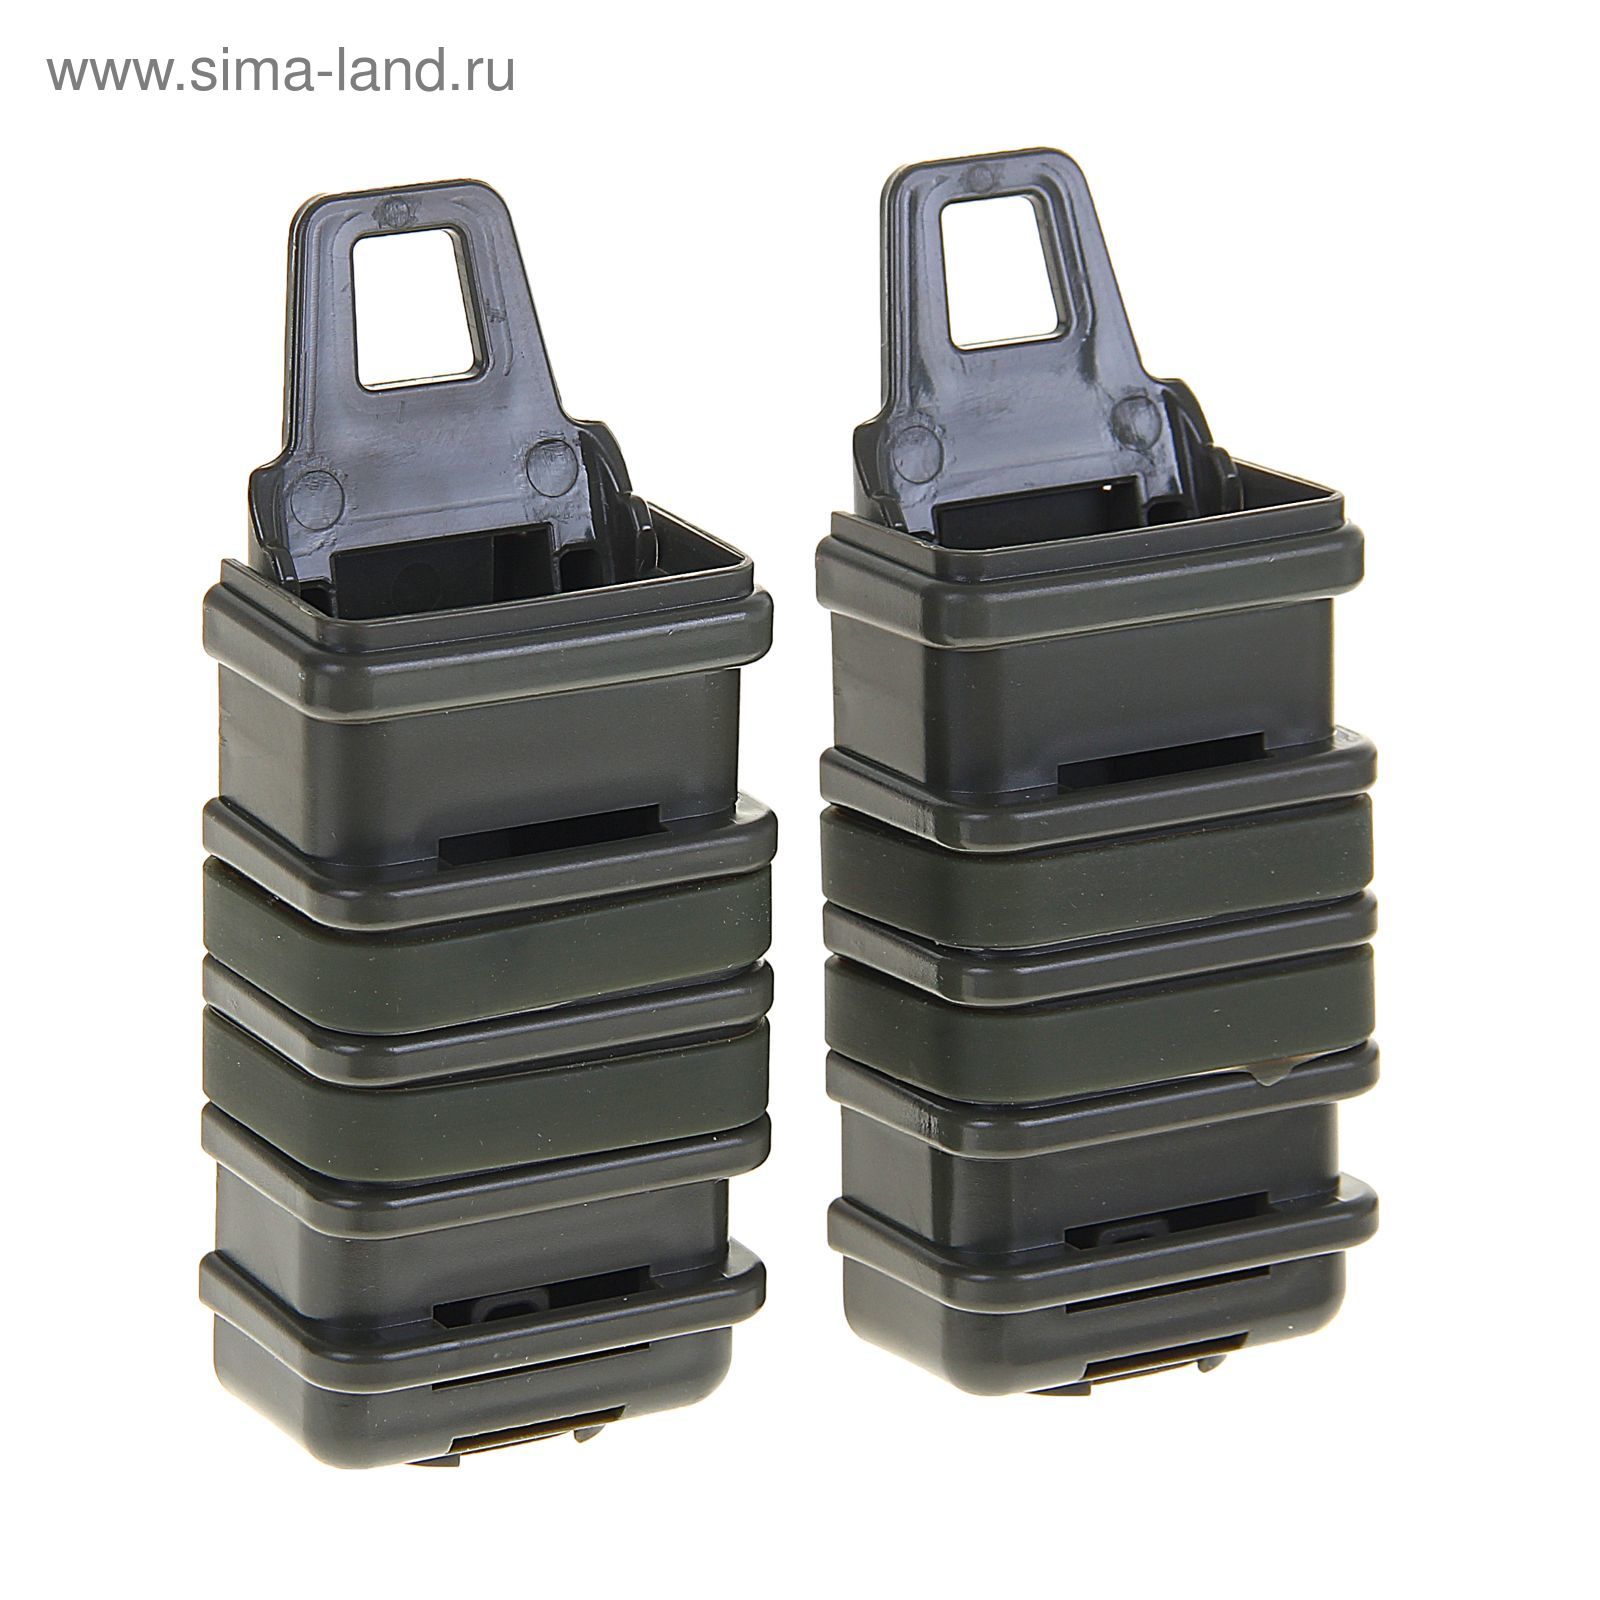 Подсумок Fast Mag accessory box of vest (S SIZE) OD MG-03-OD